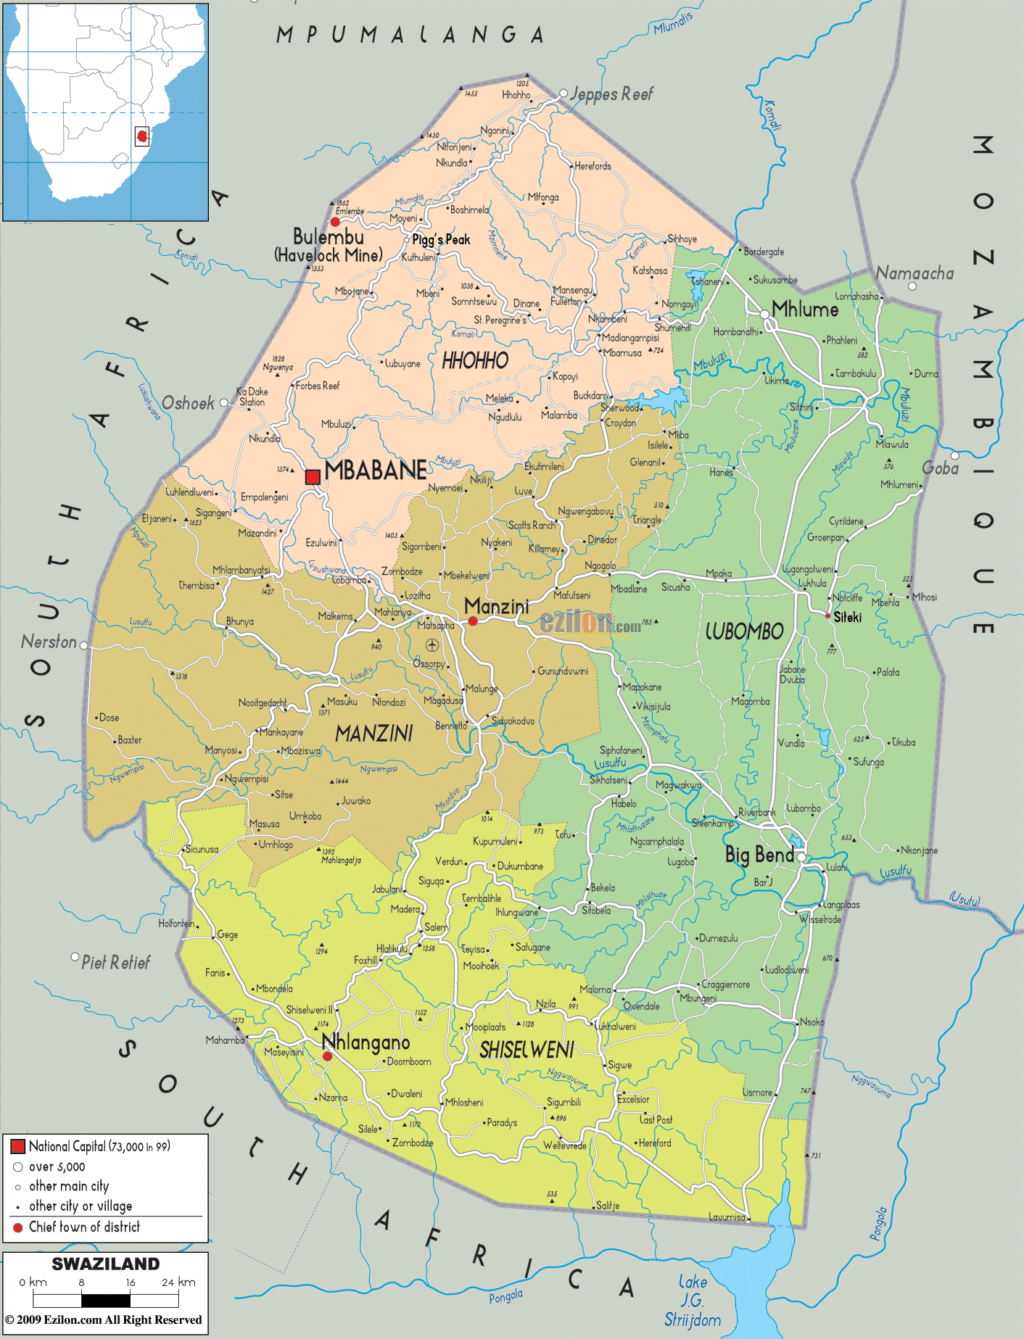 Eswatini political map.